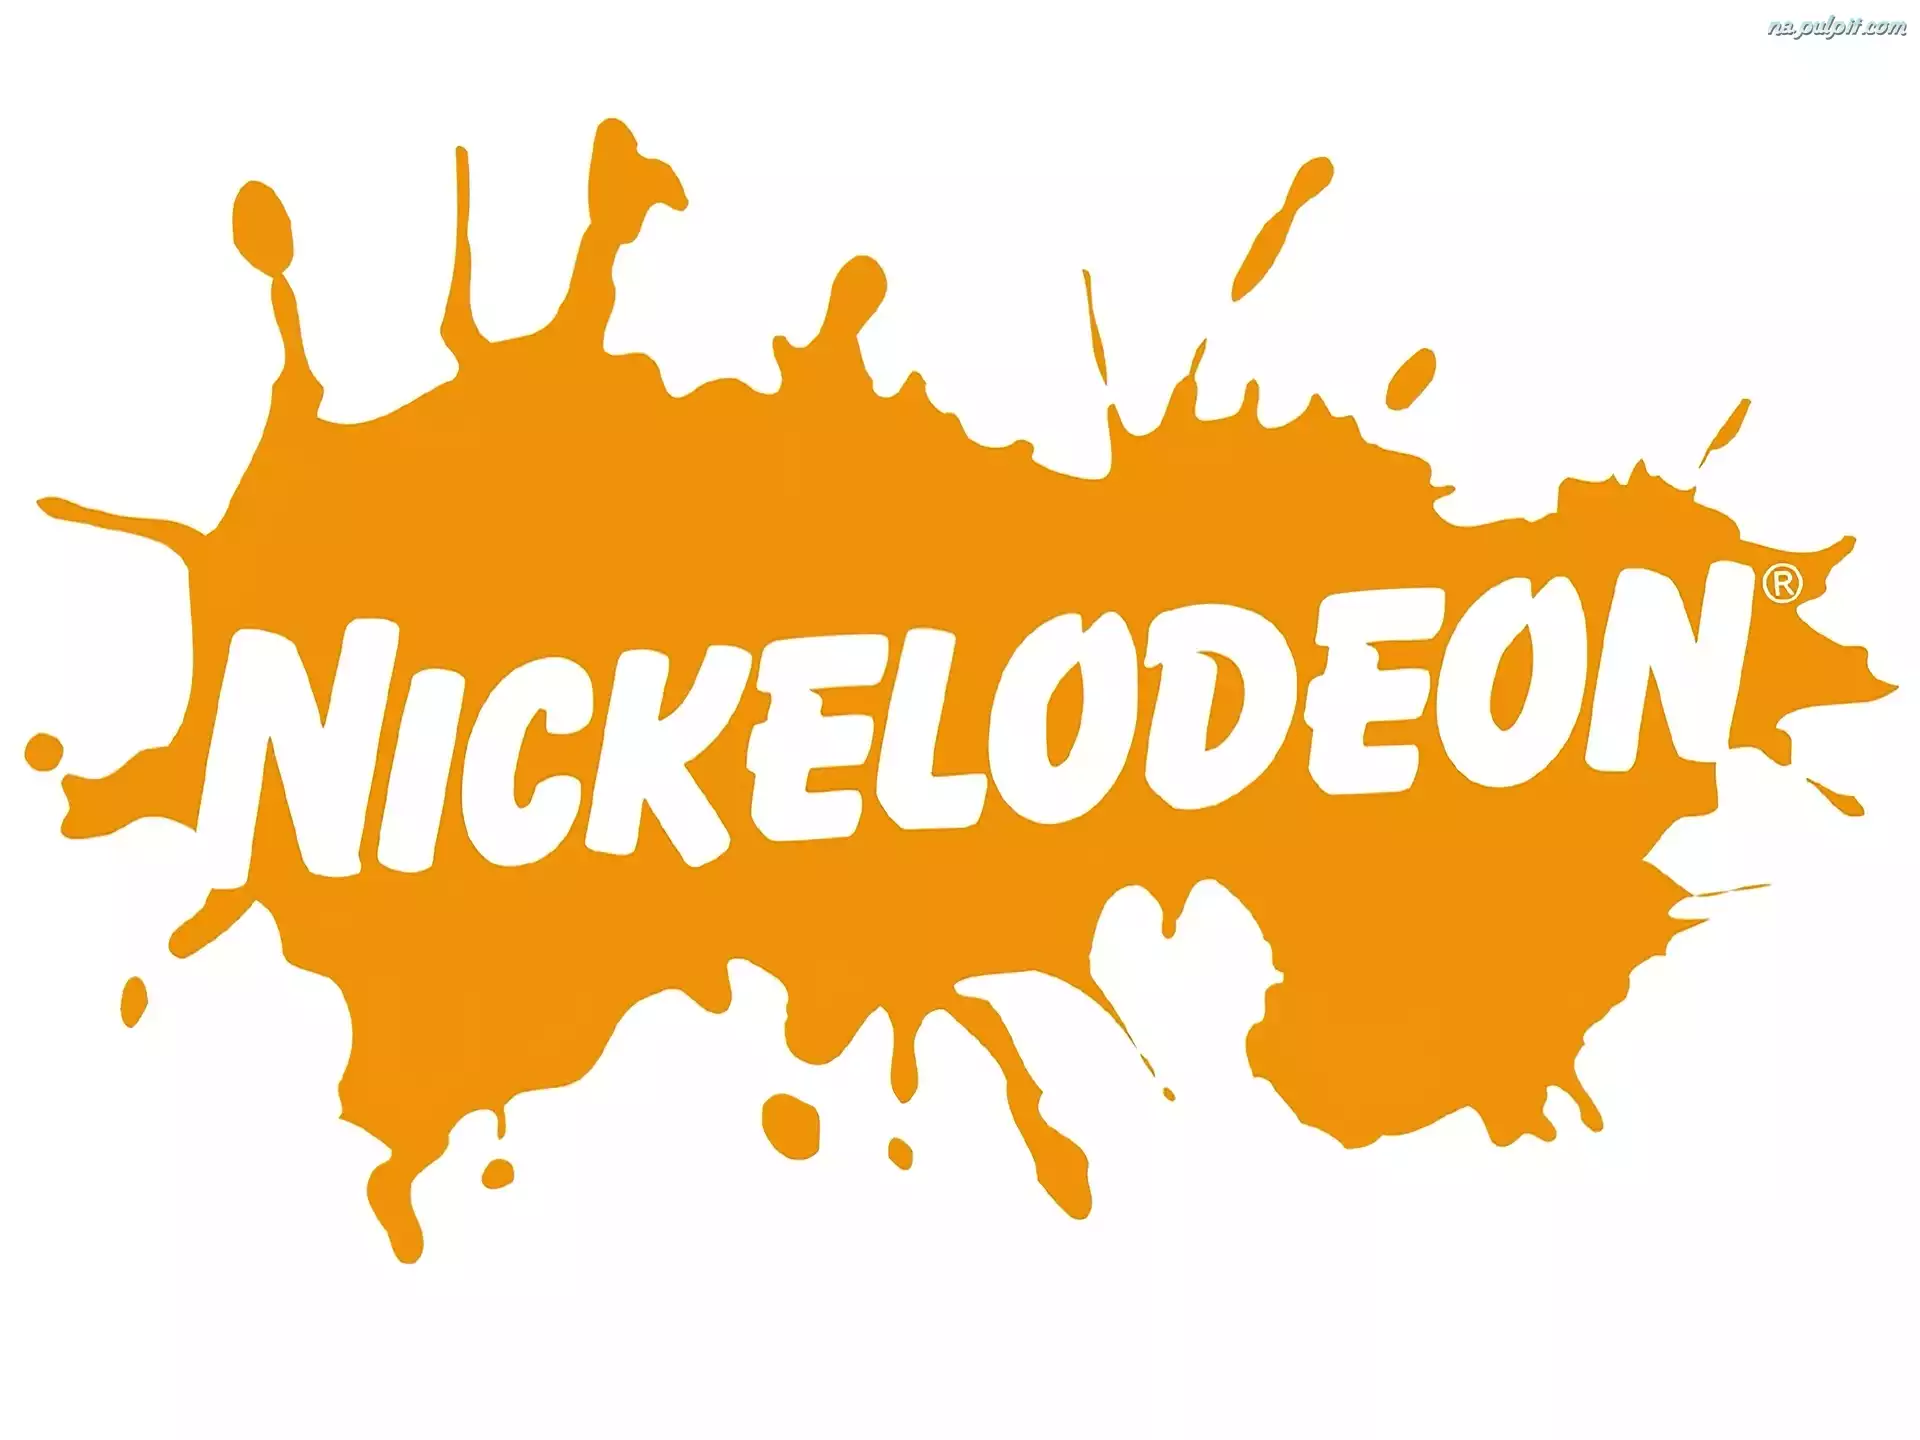 Nickelodeon, logo